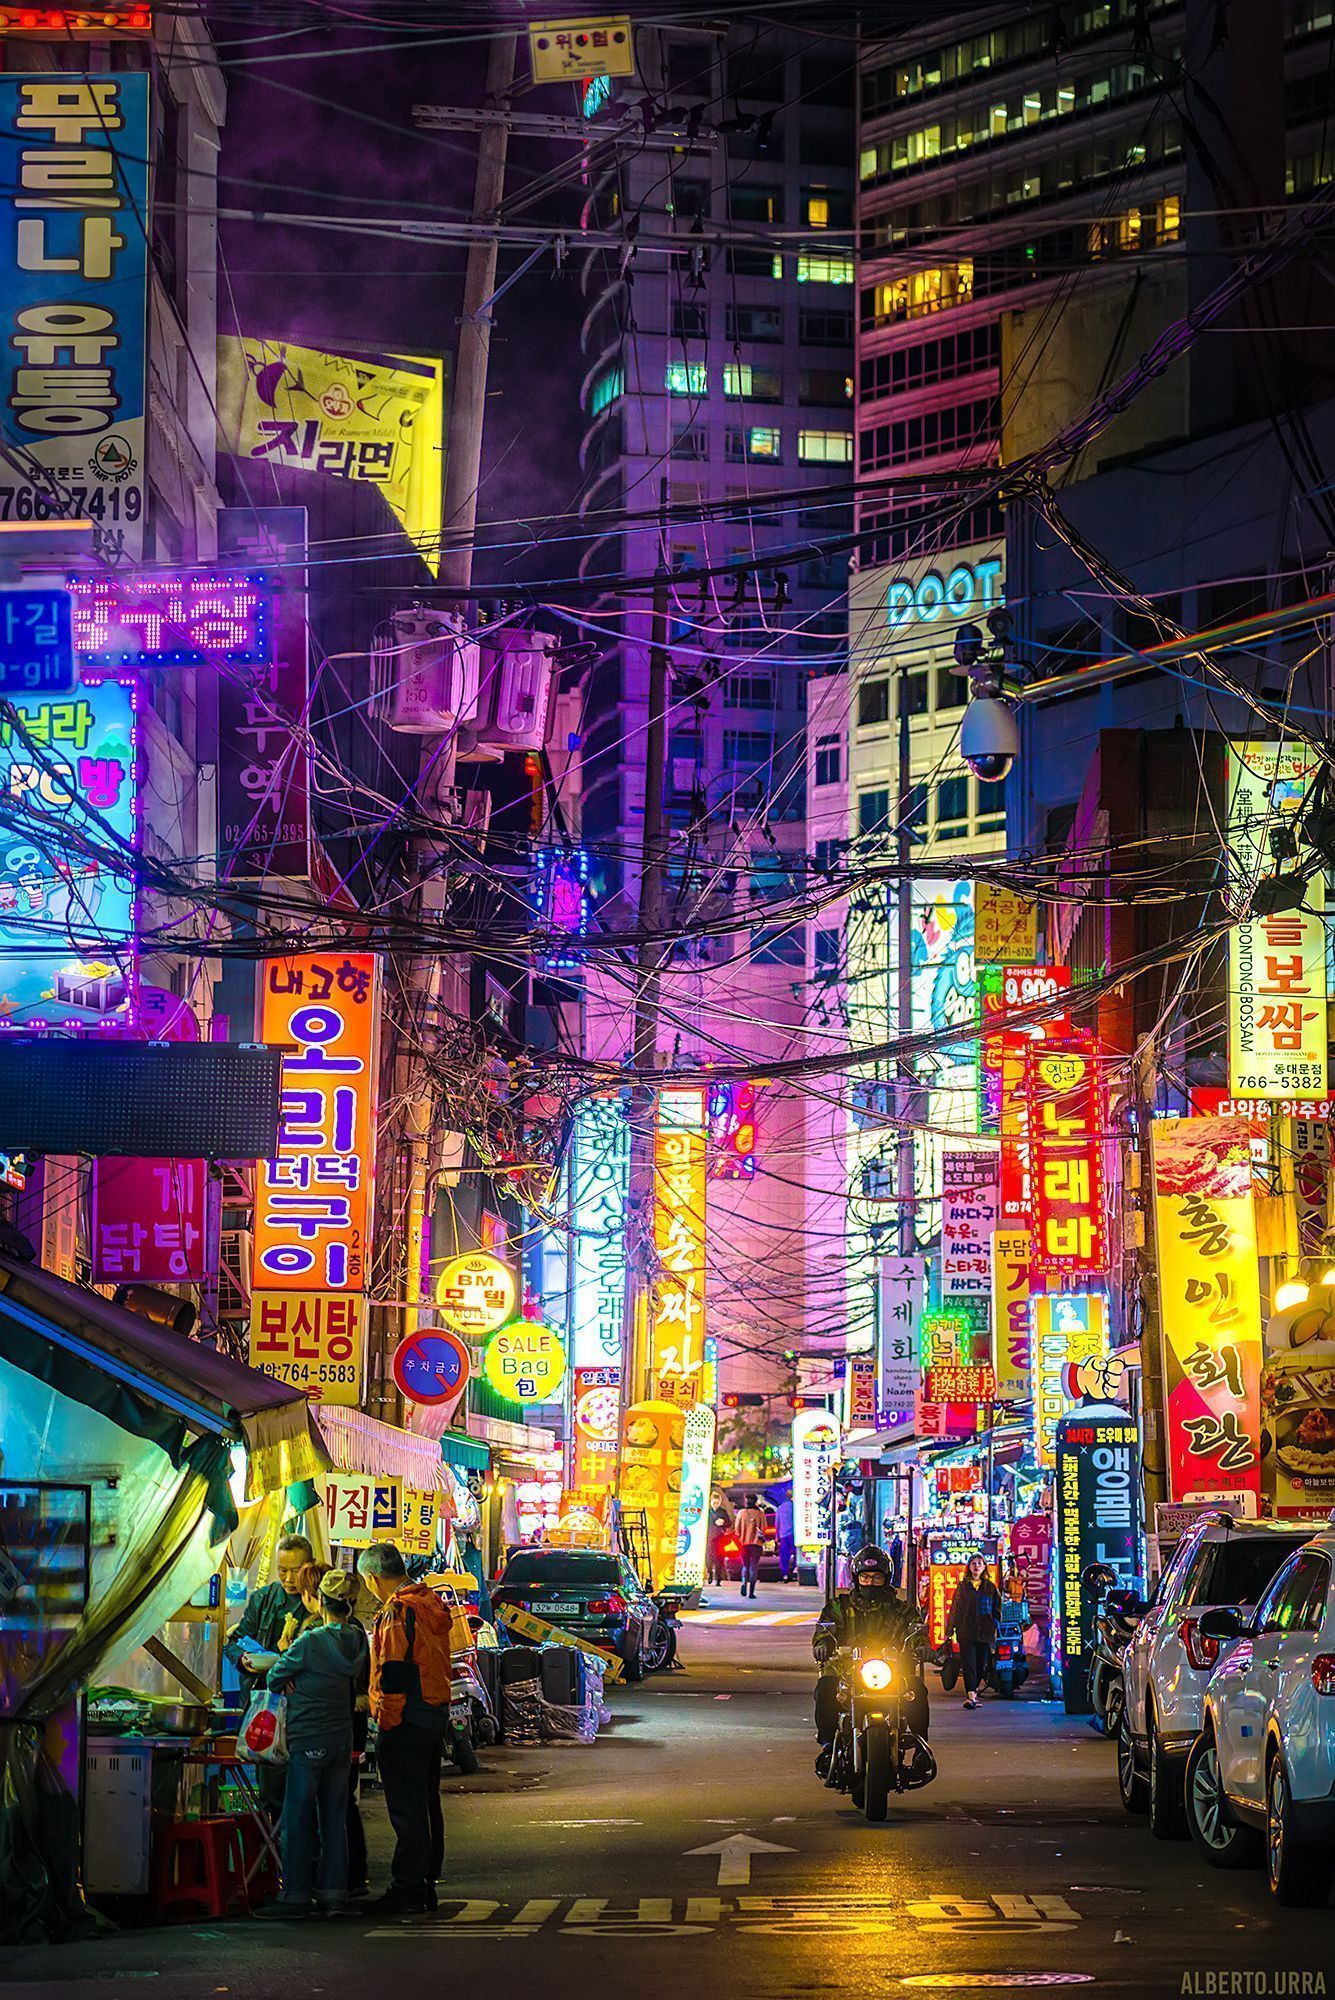 A city street with many neon lights - Seoul